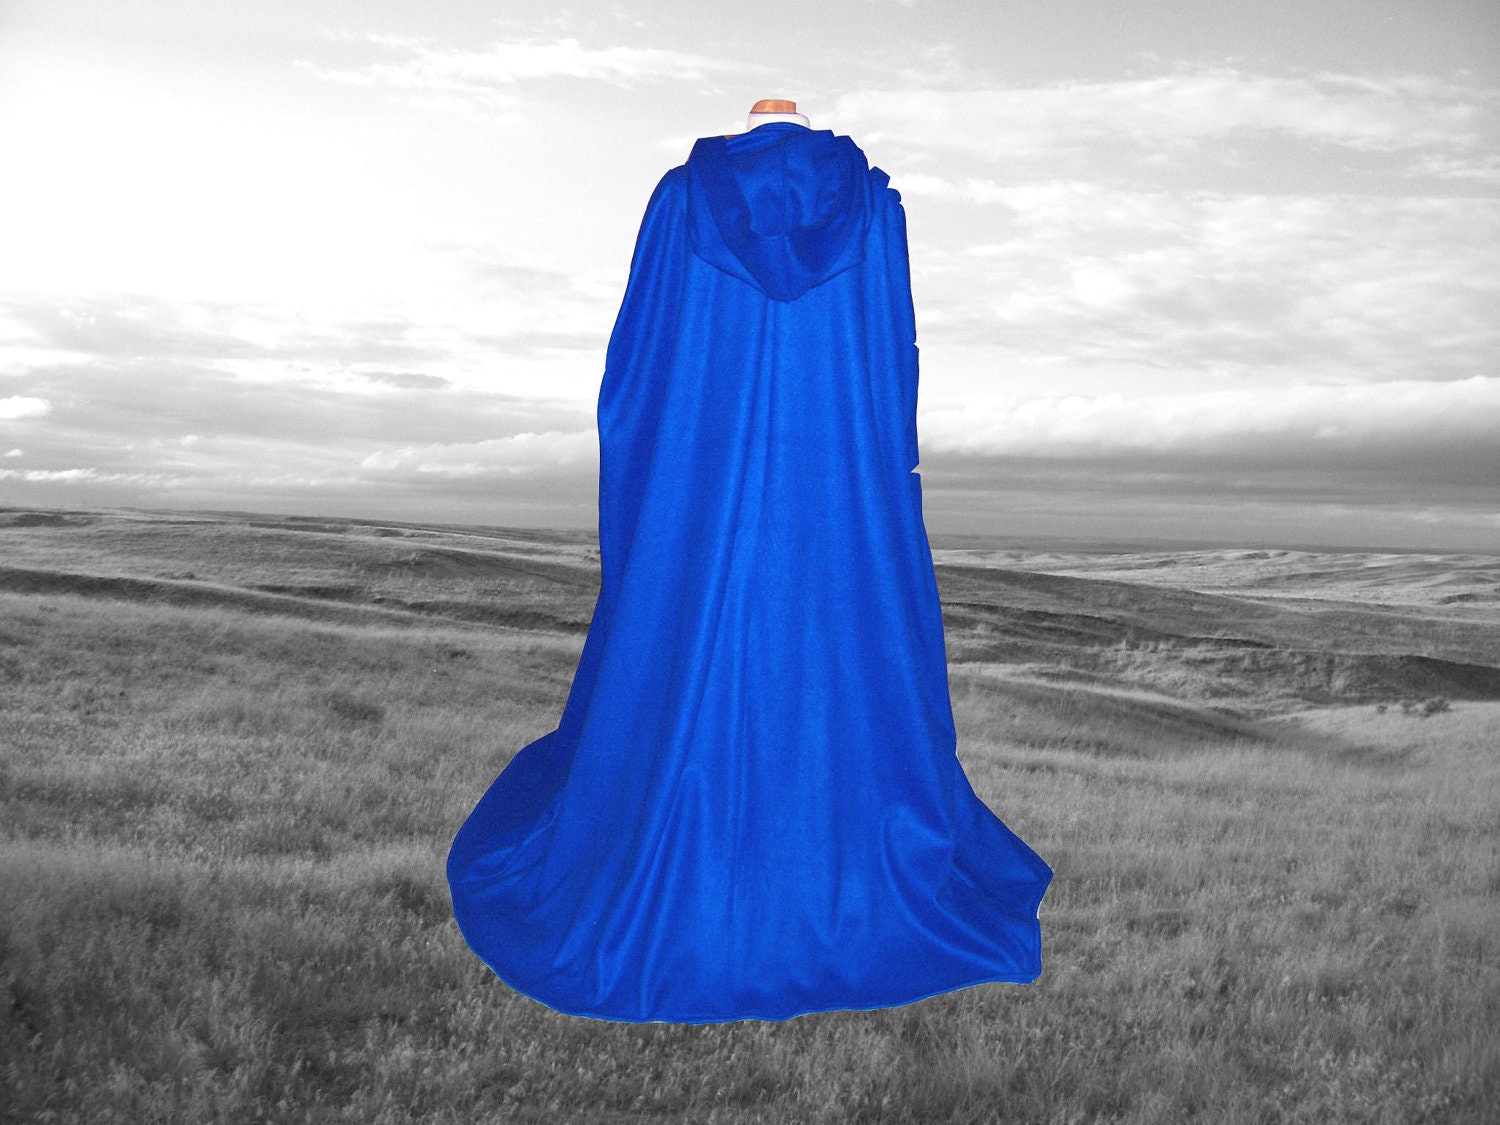 Blue Hooded Cloak Fleece Cape Costume Fantasy by MWestDesigns